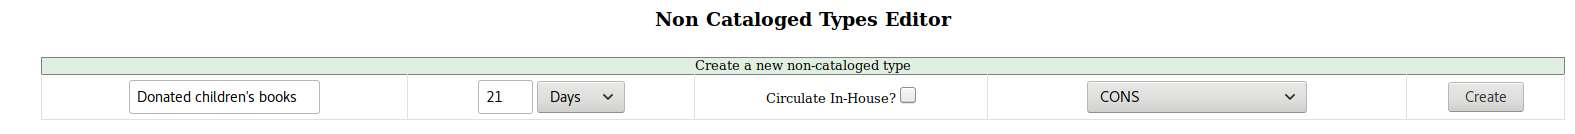 noncataloged type add